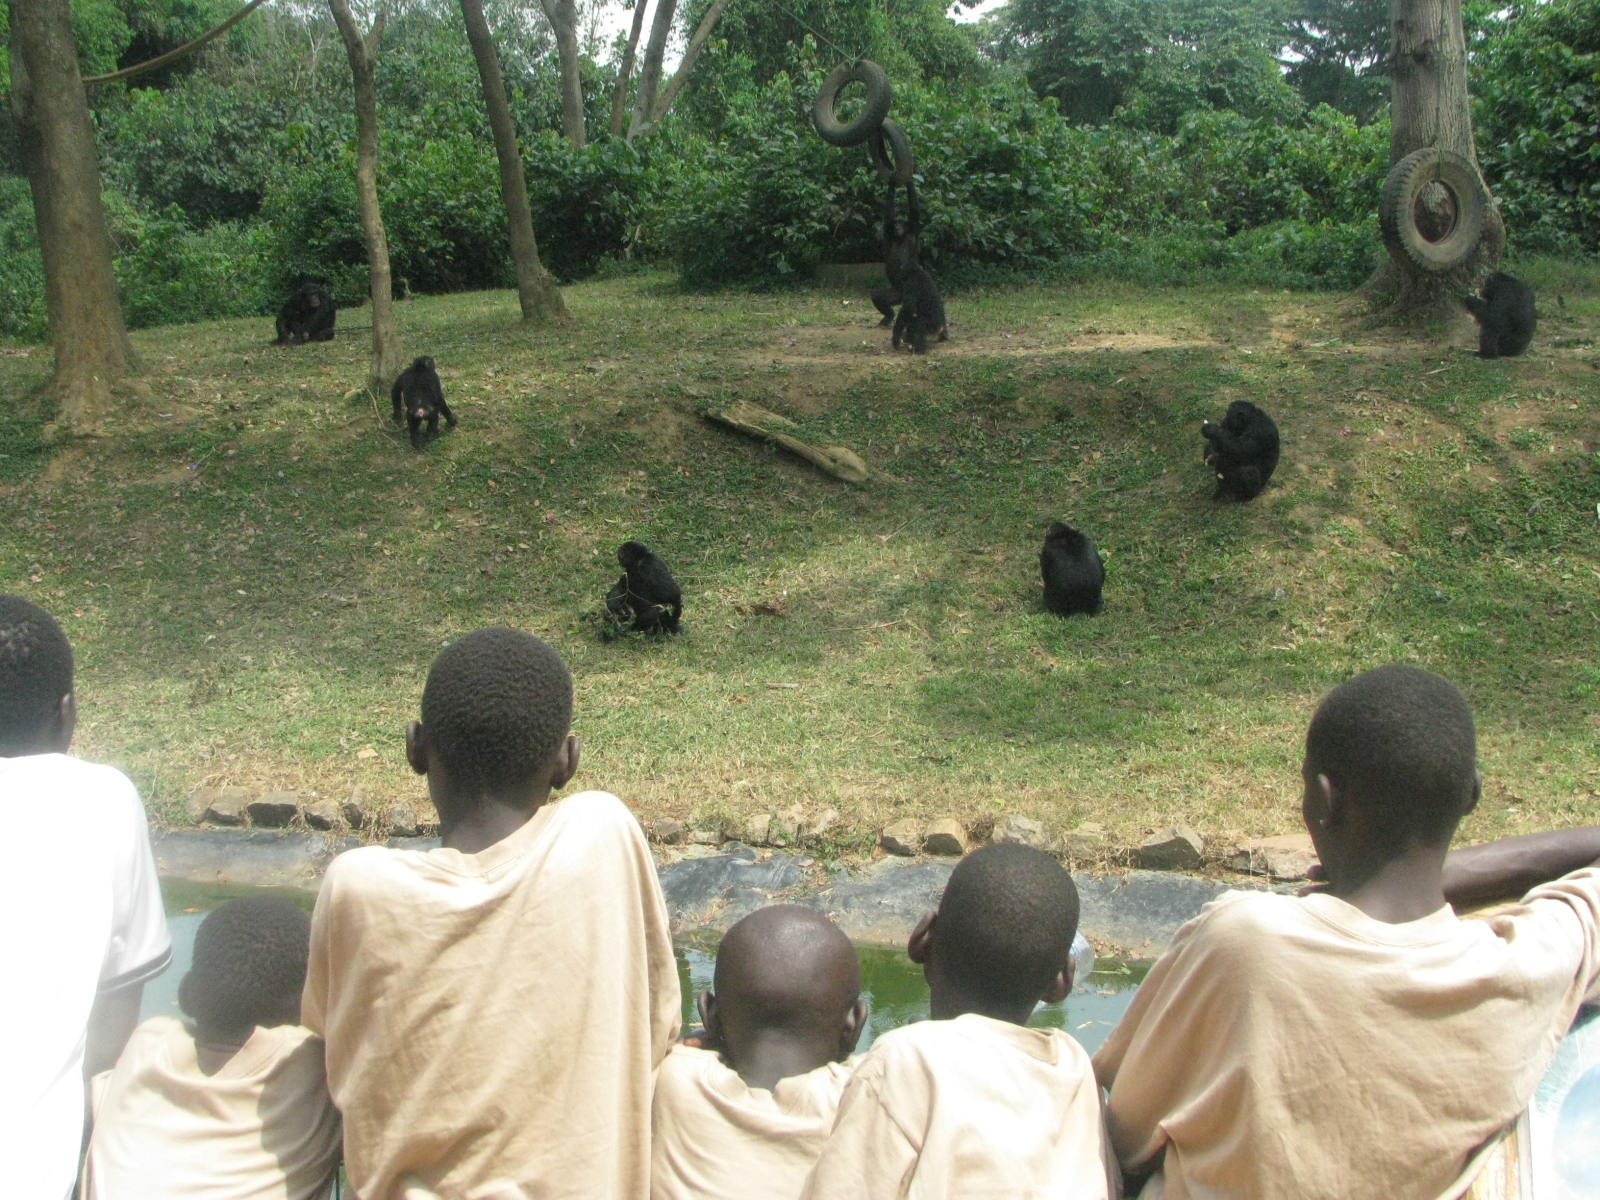 Watching the chimpanzees